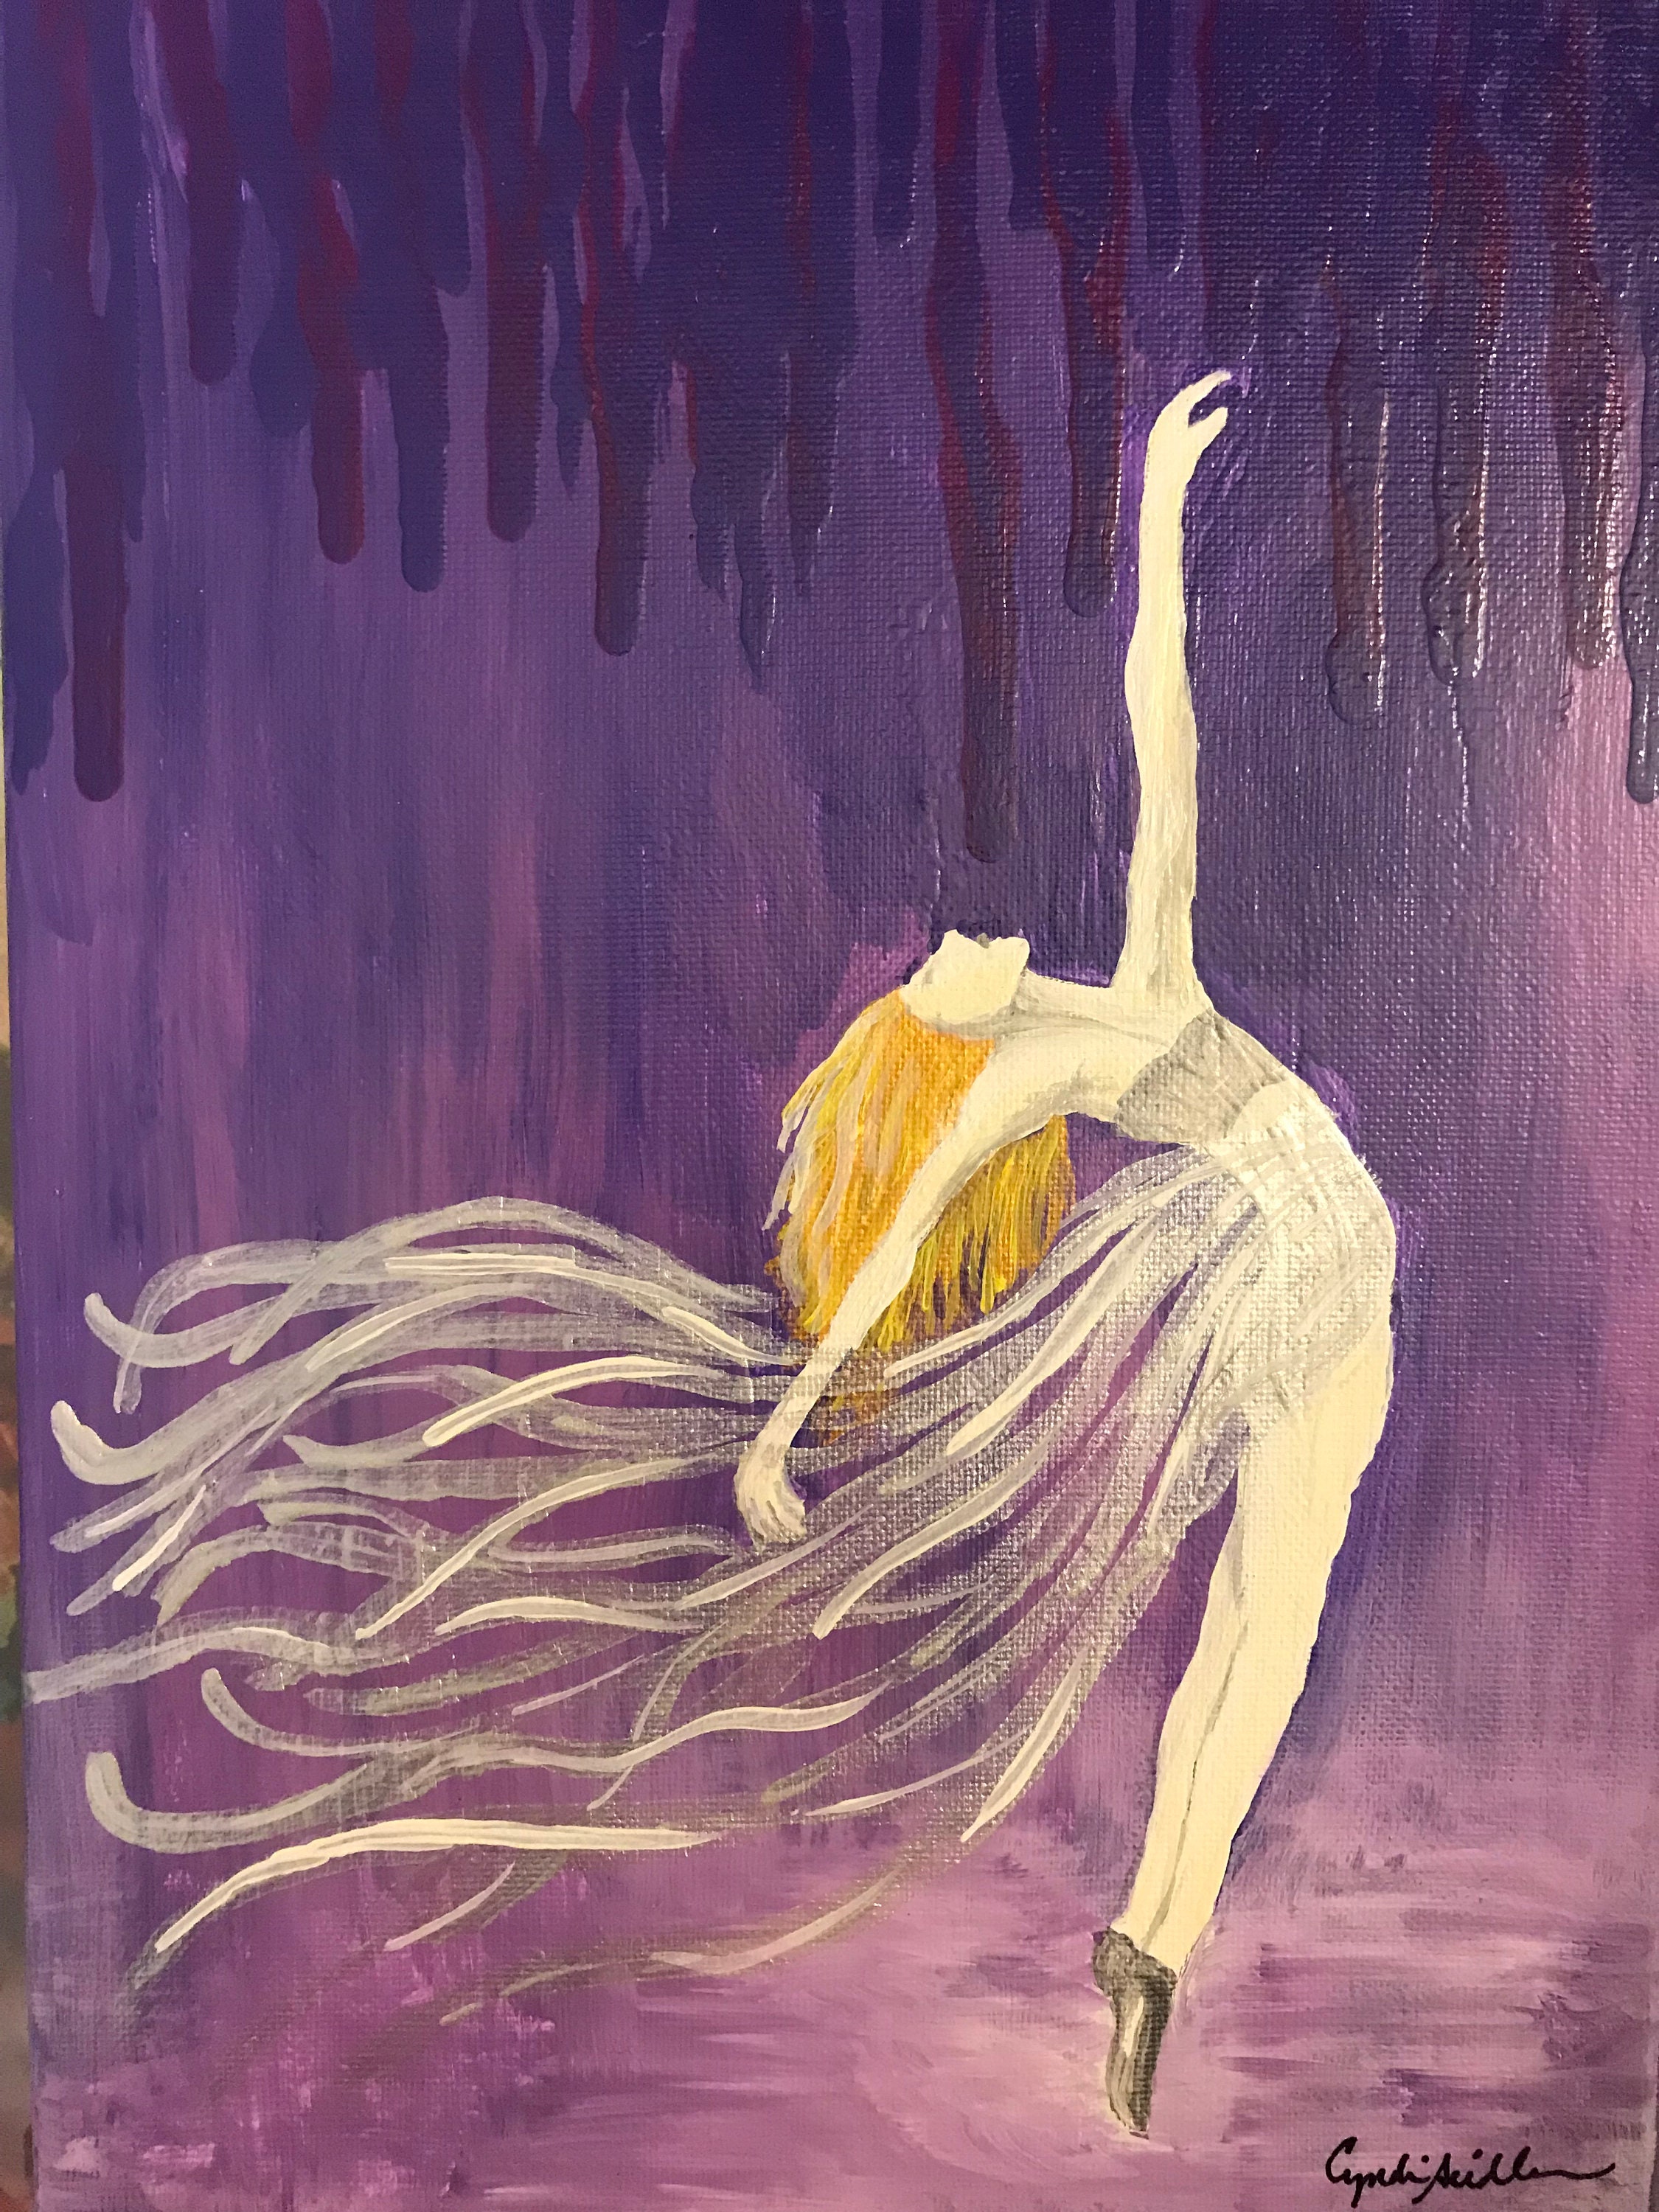 Fluid Dancer Abstract Wall Decor Acrylic Painting On Canvas | Etsy